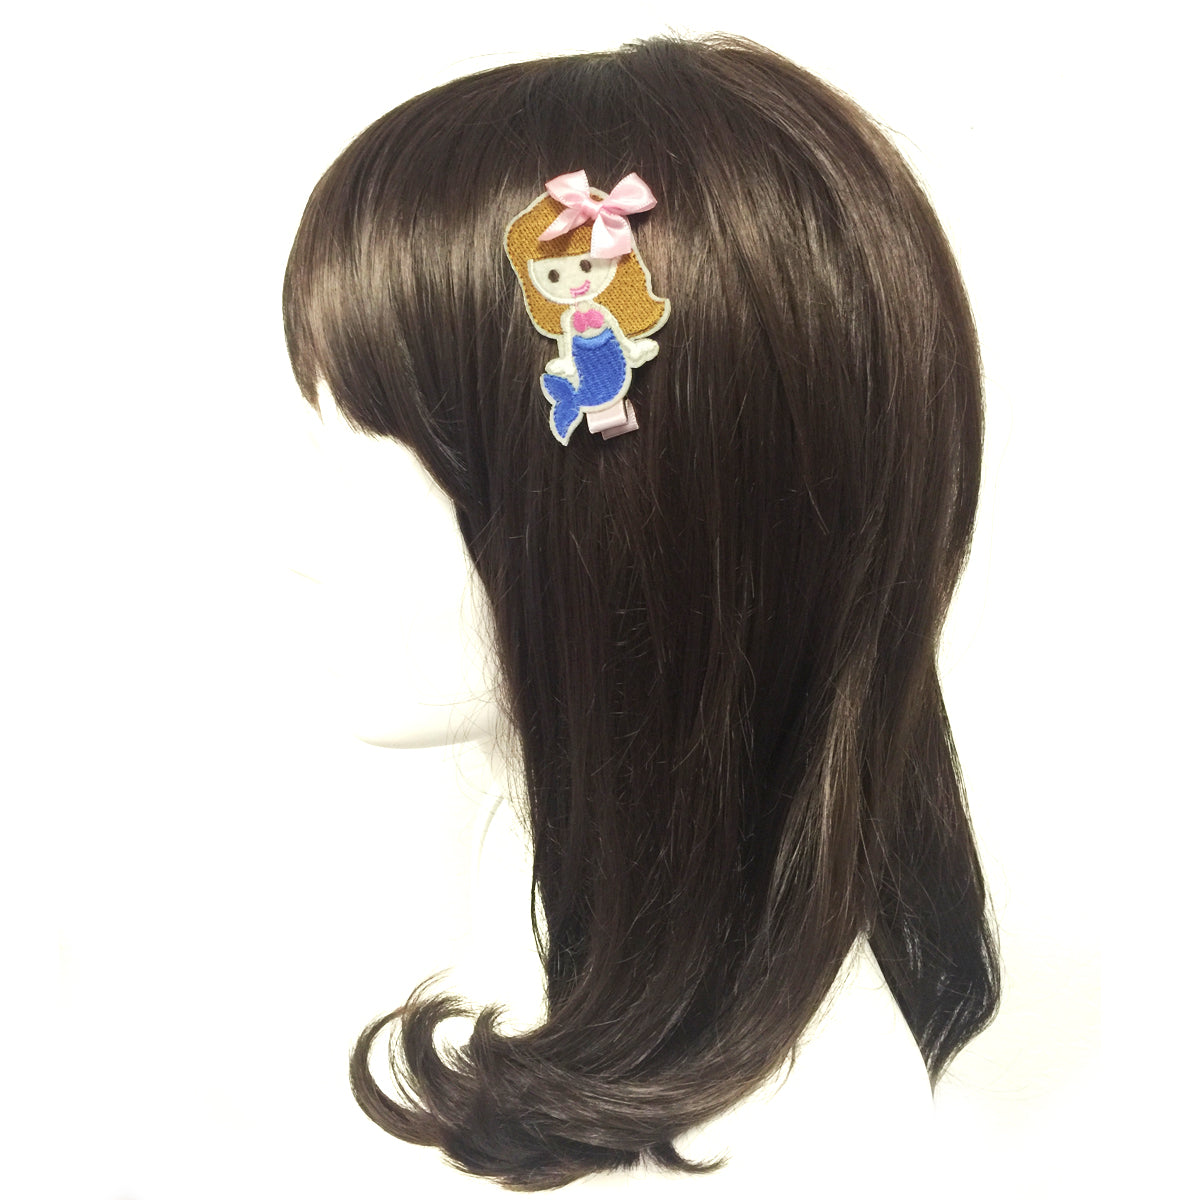 Wrapables Dress Up Fantasy Princess Hair Clips, Set of 5